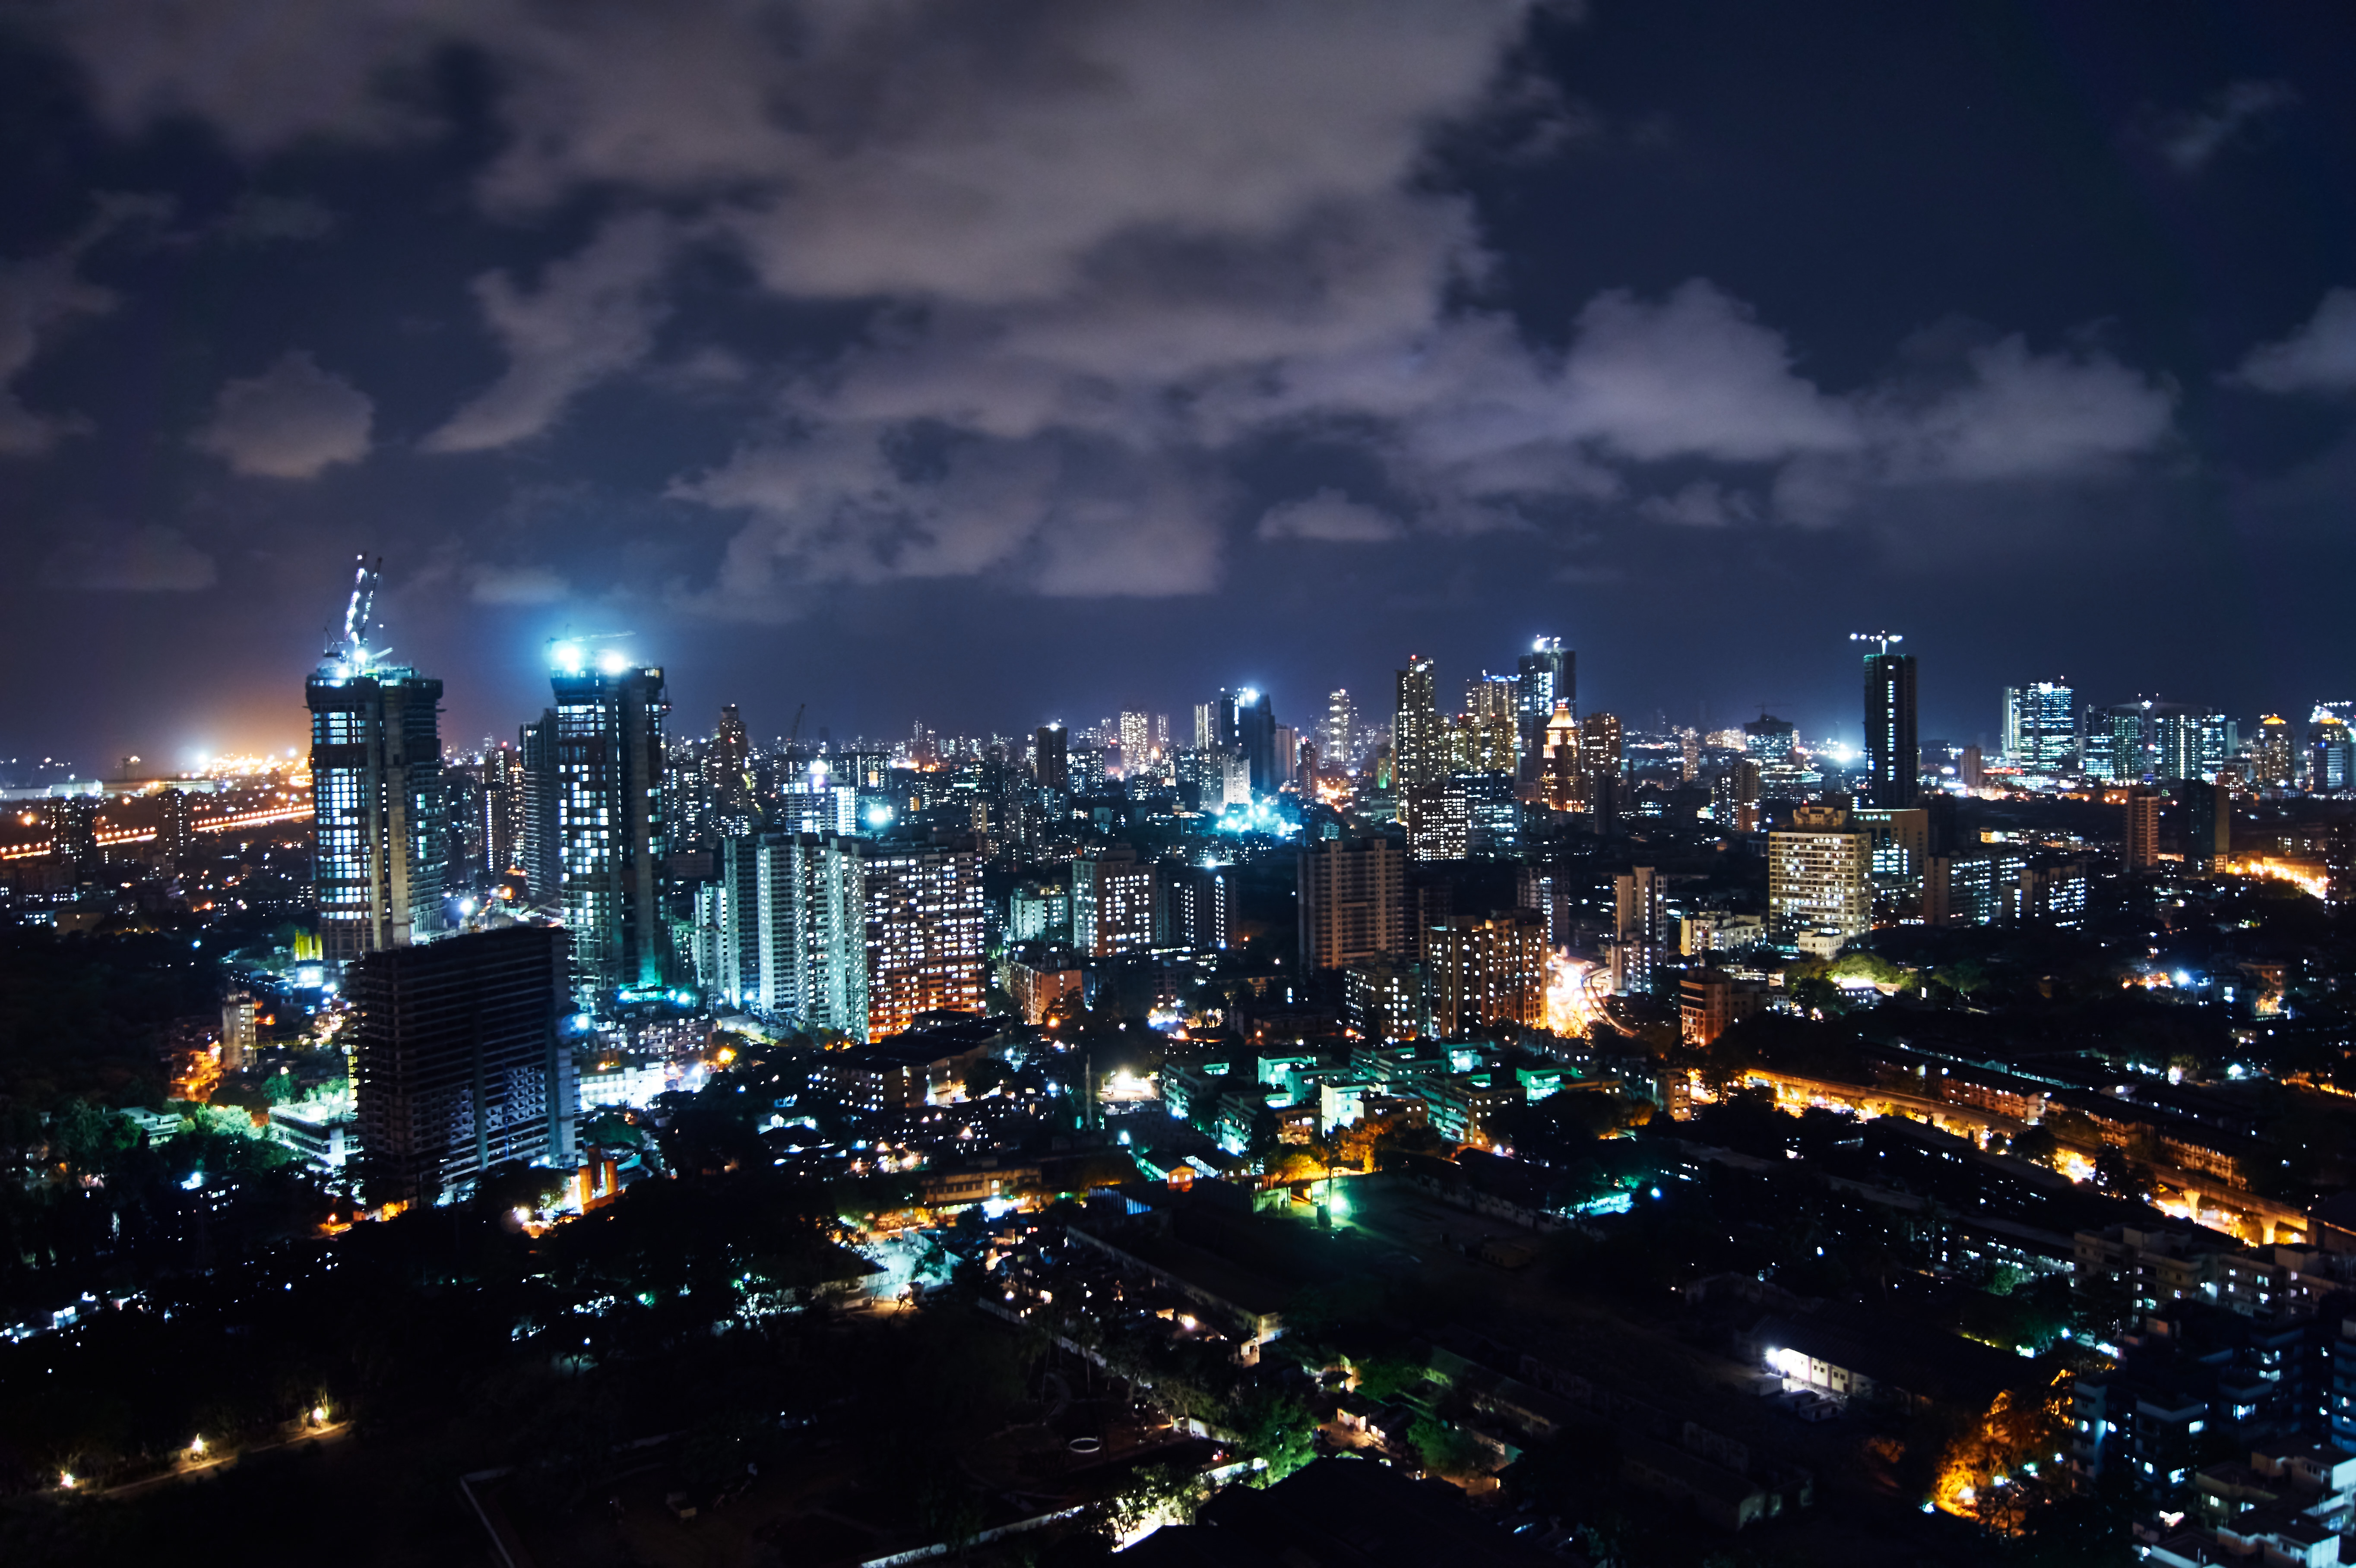 File:Mumbai Night City (18219784390).jpg - Wikimedia Commons